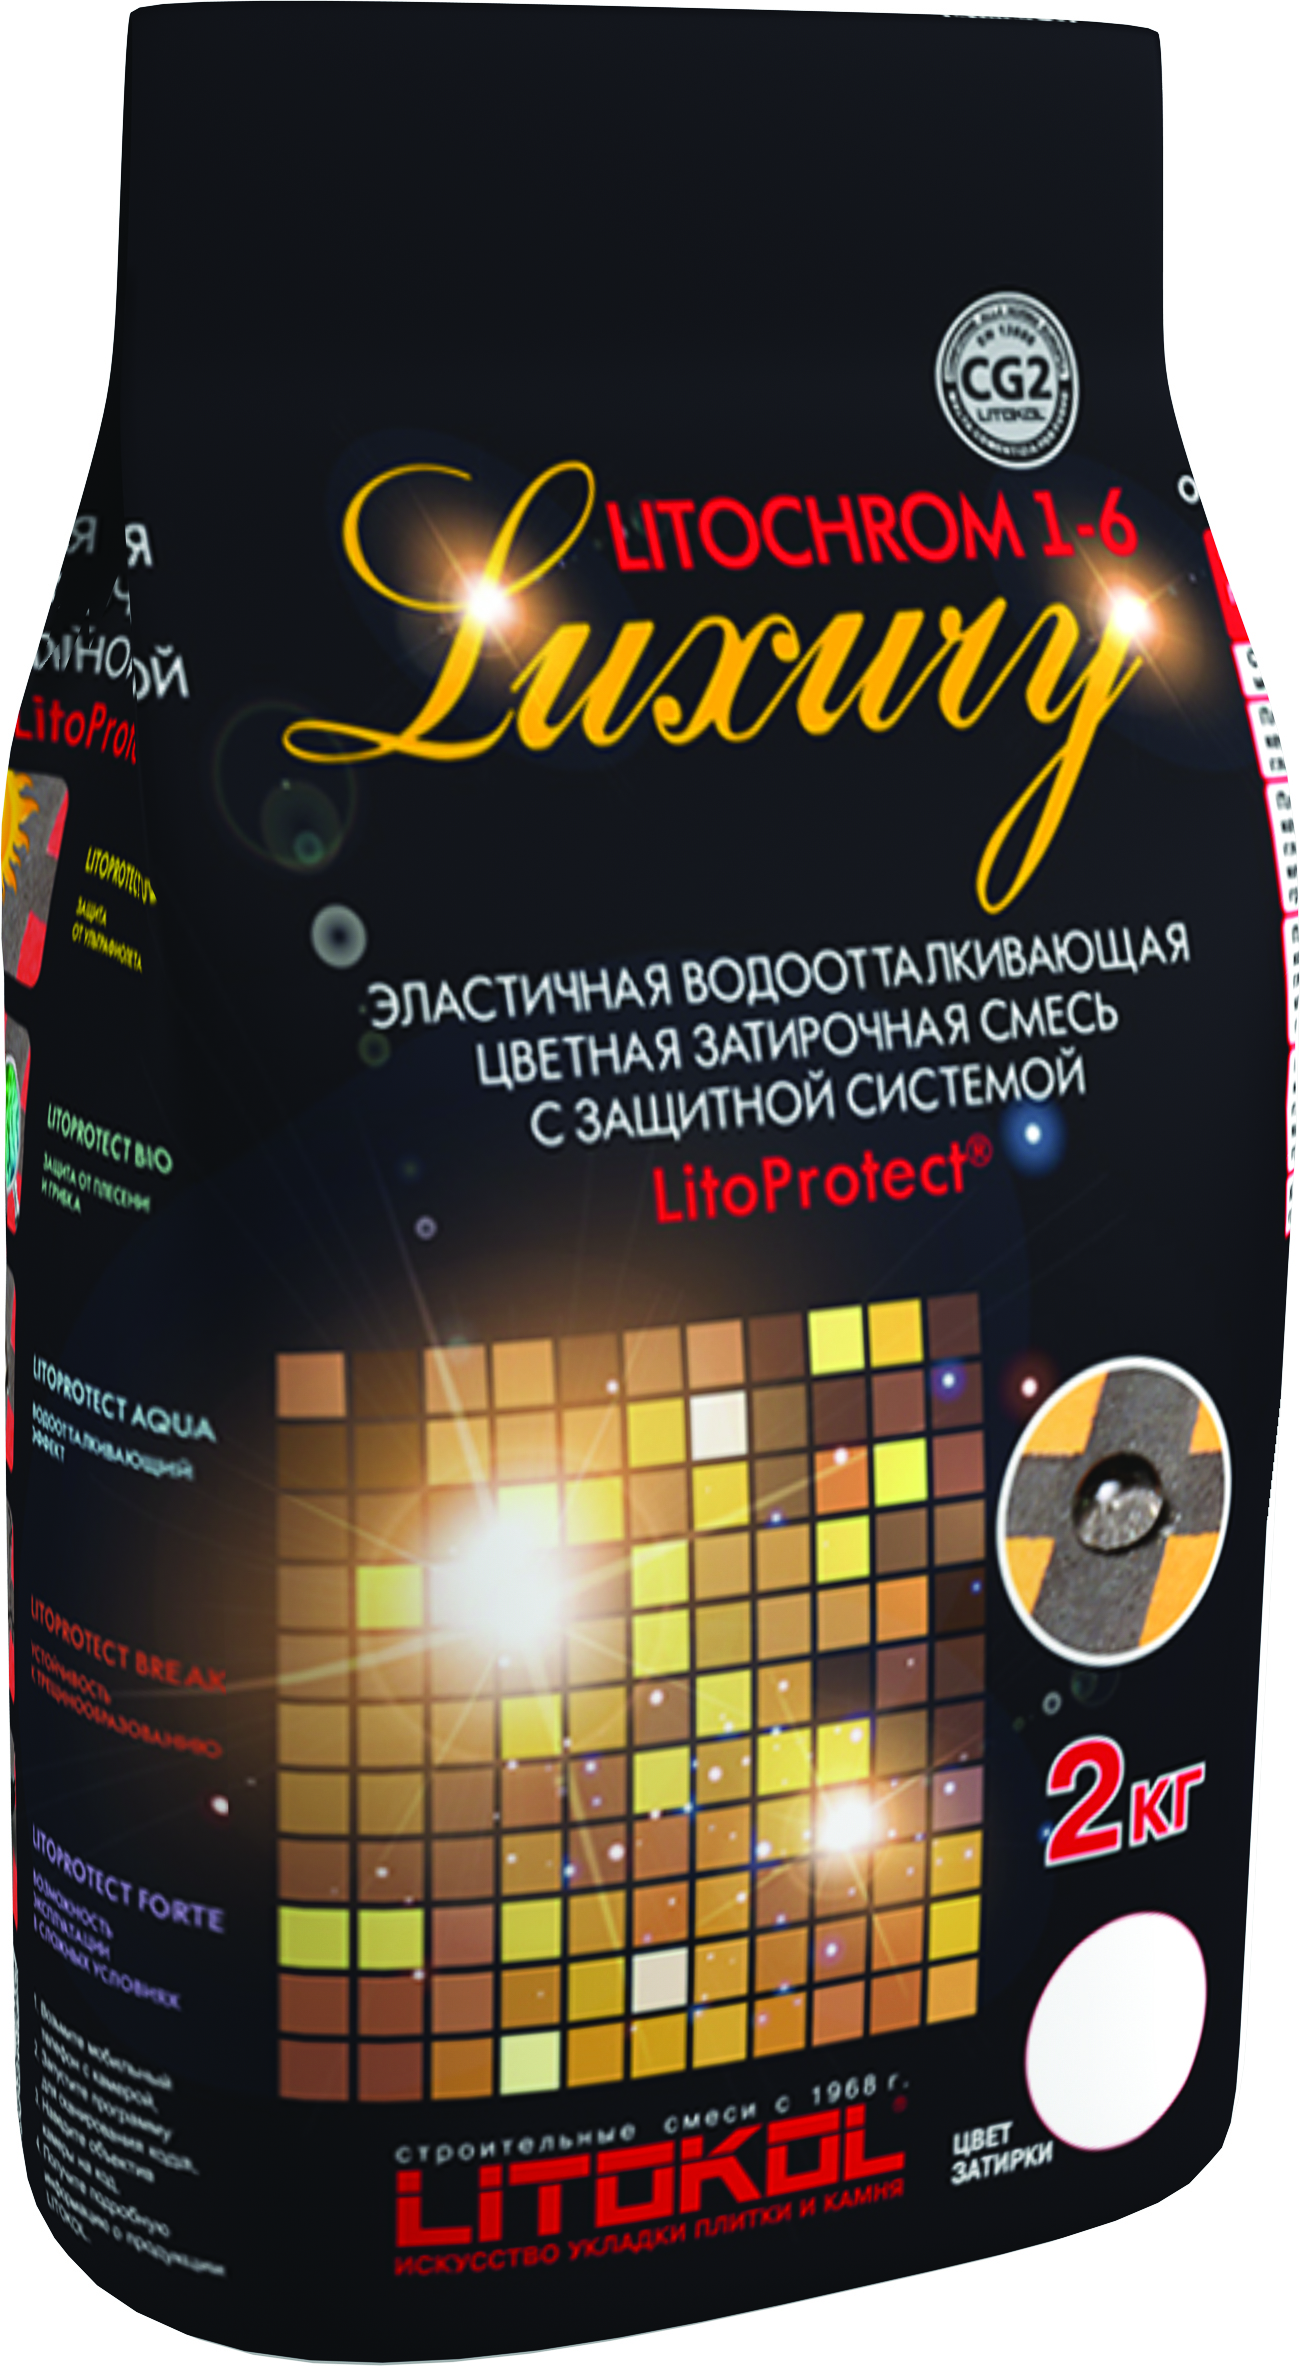 Купить Litokol Litochrom 1-6 Luxury C.490, 2 кг